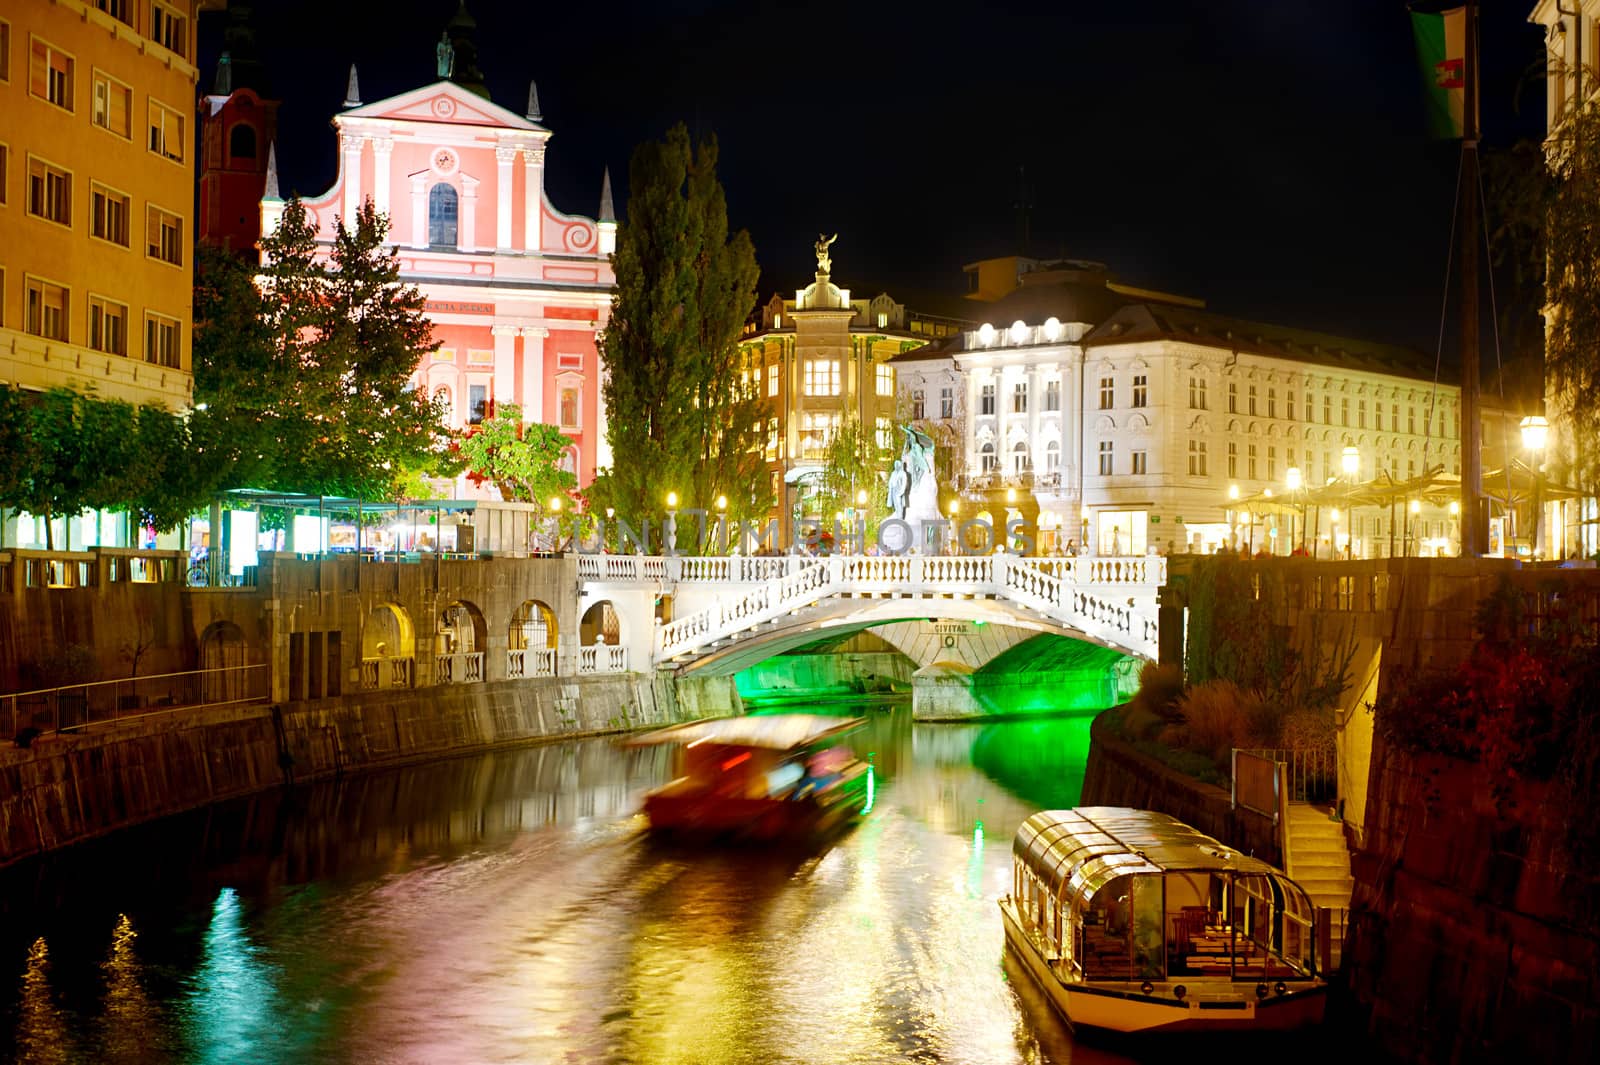 Triple Bridge and Franciscan Church at night. Ljubljana, Slovenia